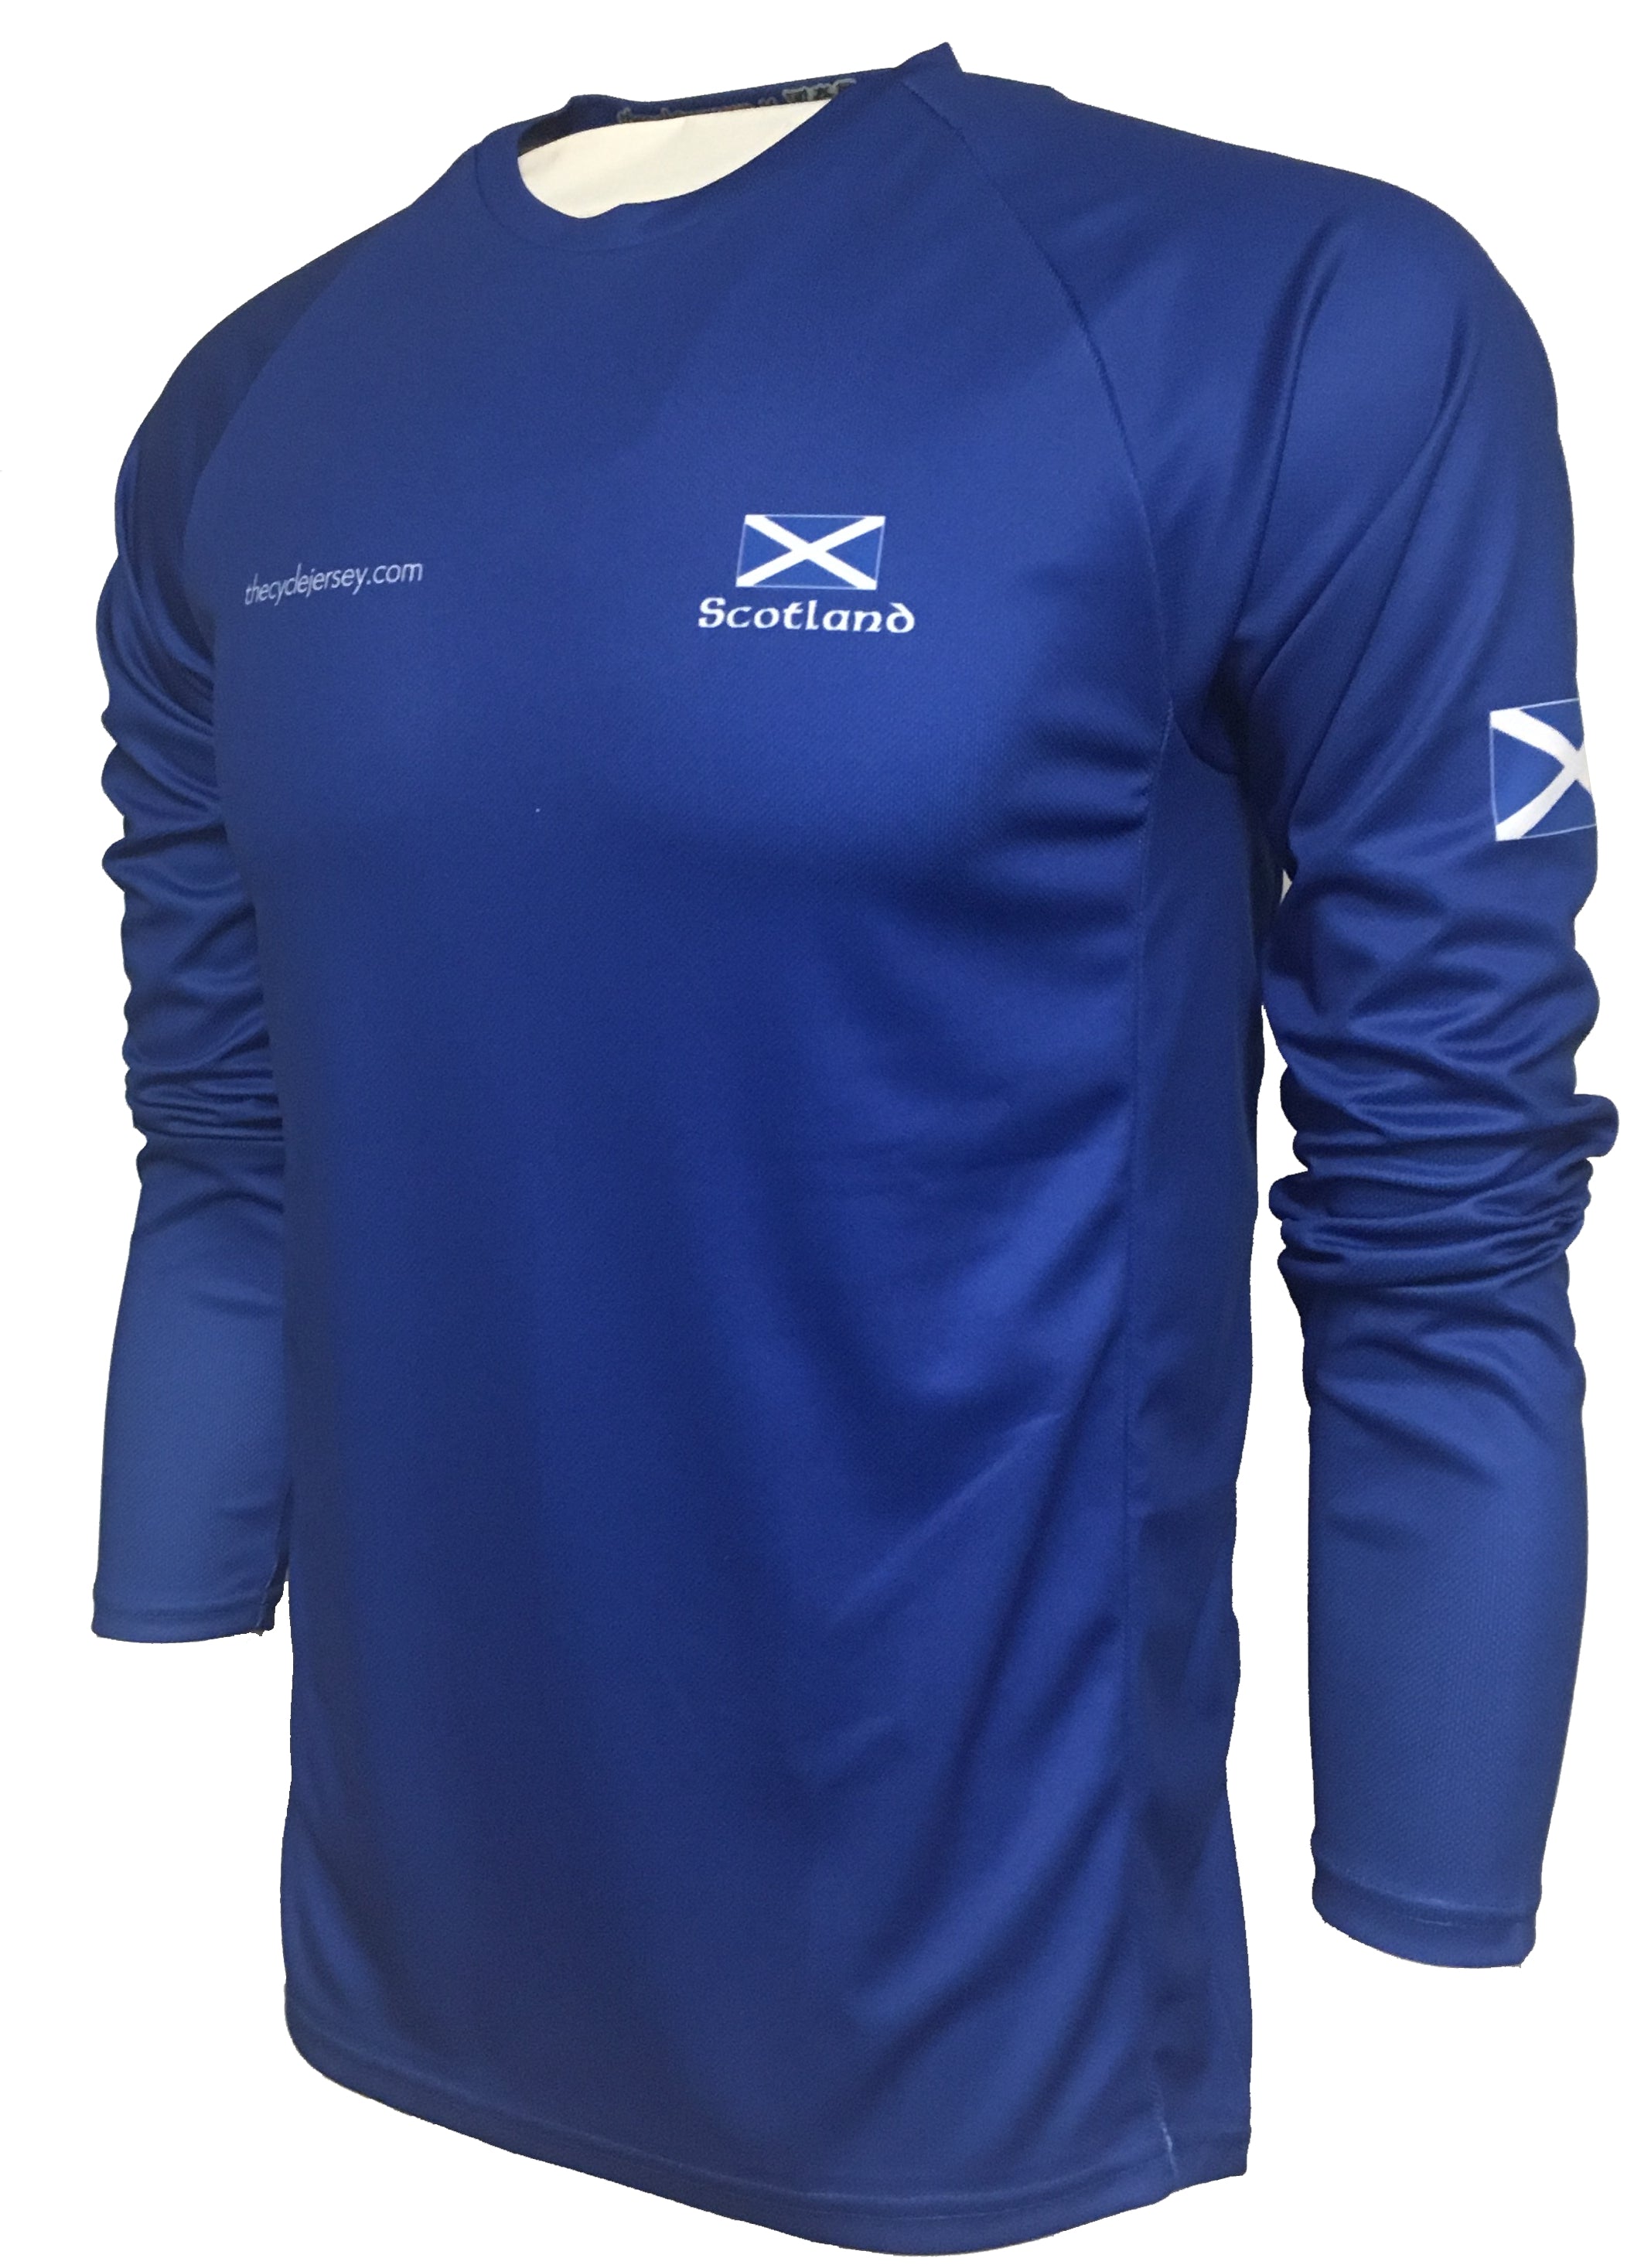 Scotland Original Enduro Cycle Jersey Front